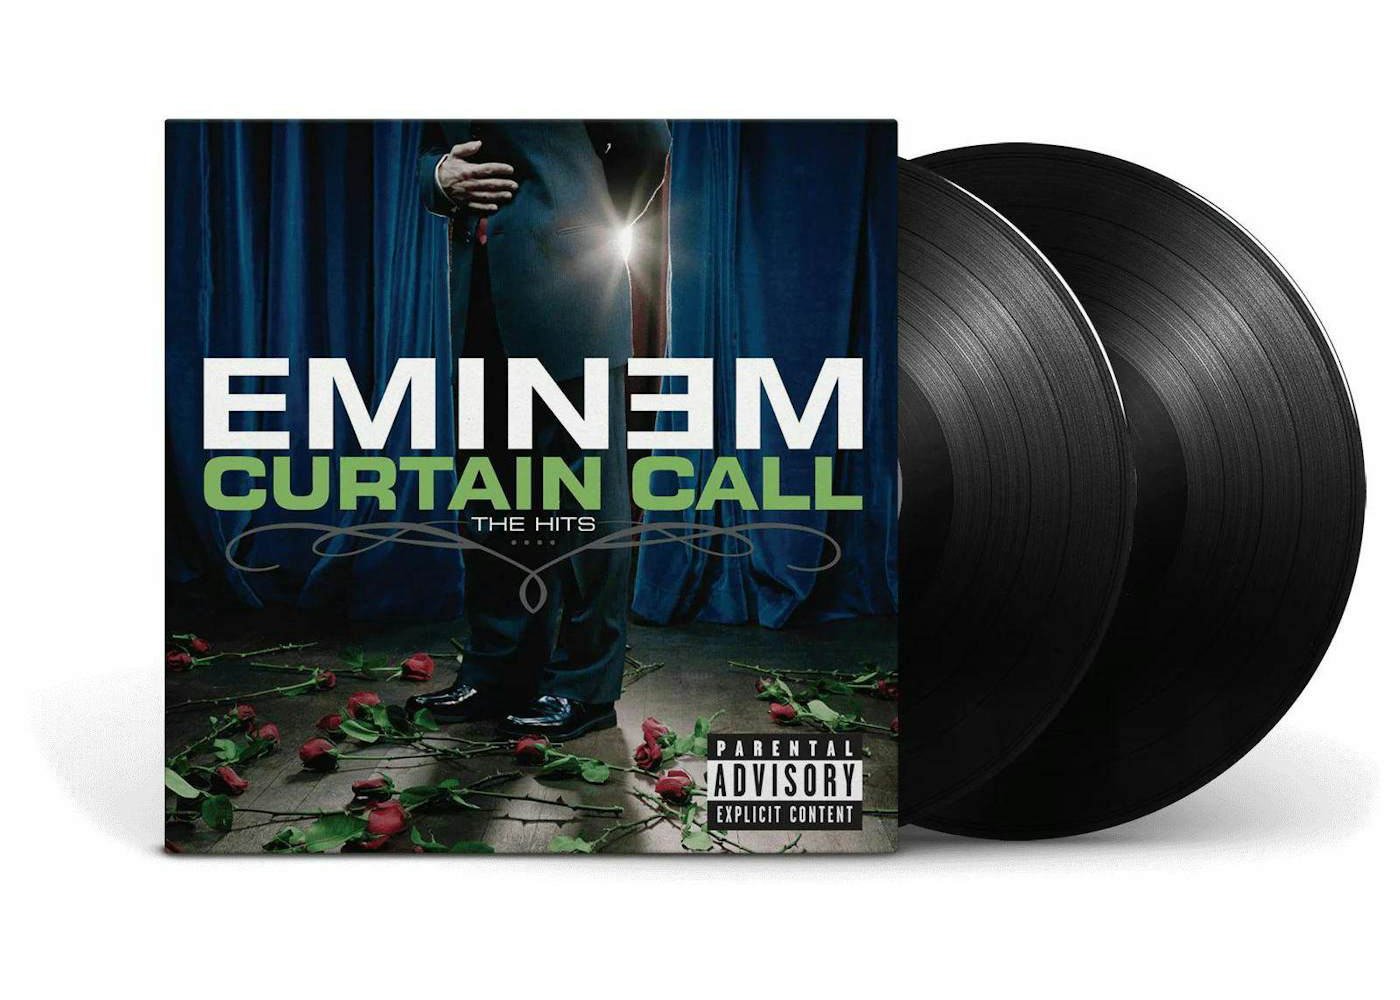 Eminem Curtain Call Limited Edition 2XLP Vinyl Black - US